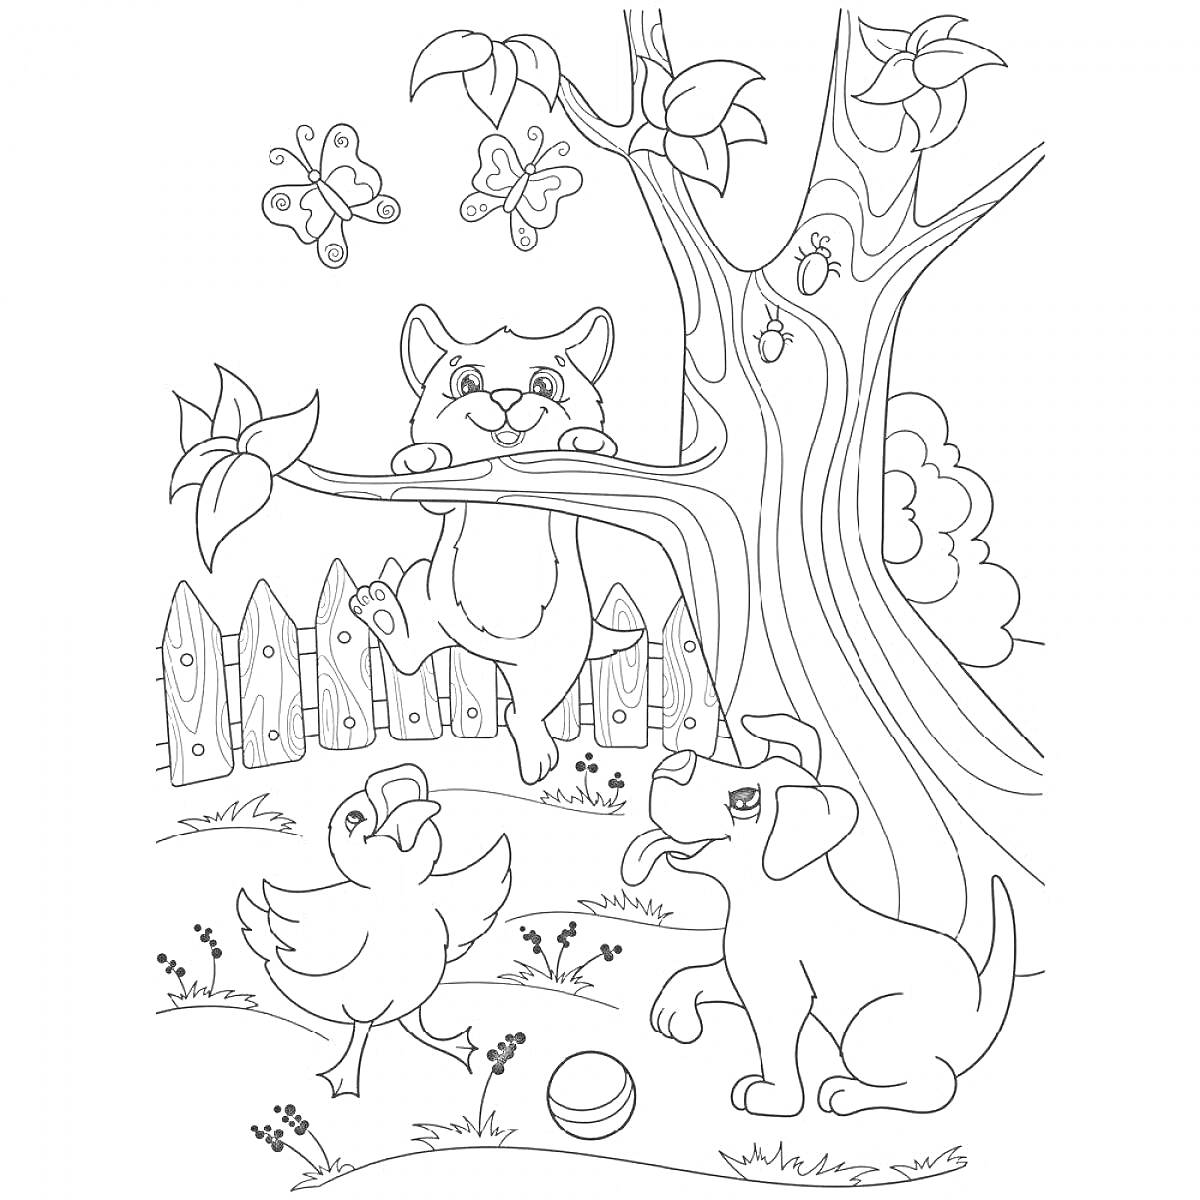 На раскраске изображено: Кот, Собака, Утка, Забор, Трава, Цветы